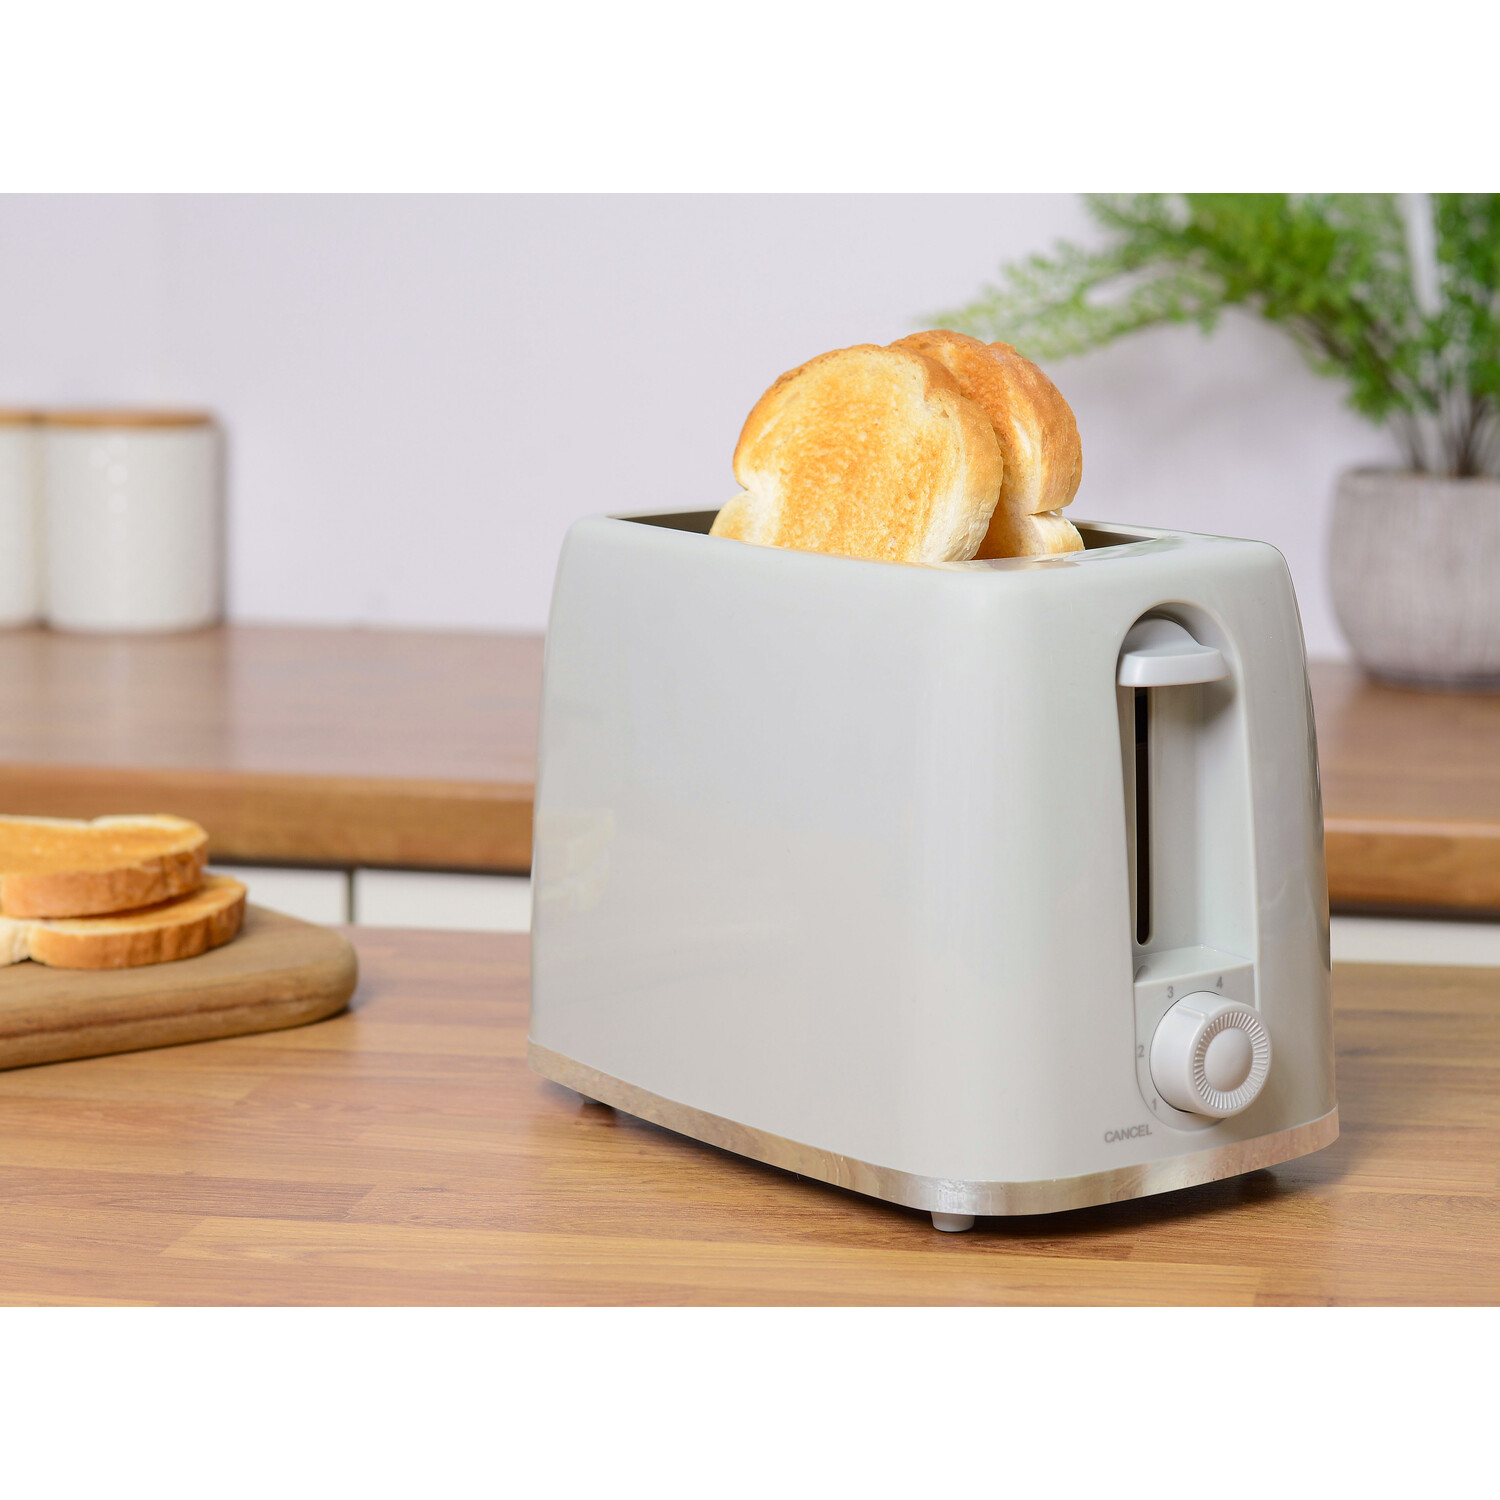 My Kitchen 2-Slice Toaster - Grey Image 2